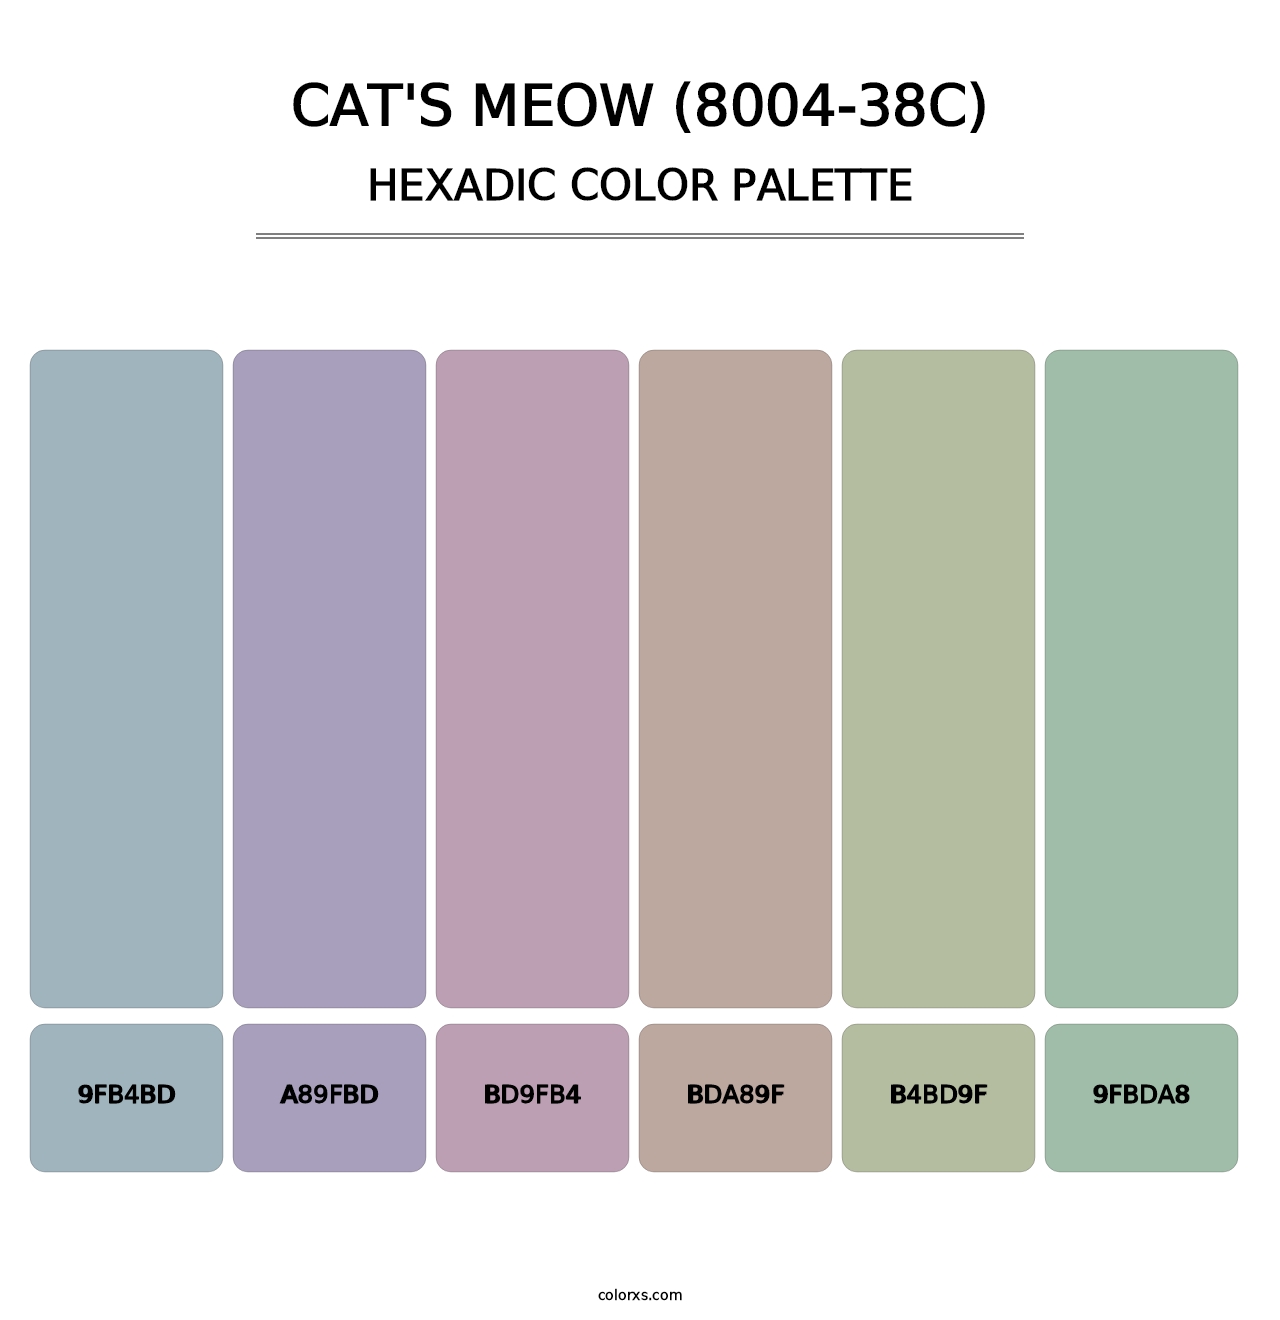 Cat's Meow (8004-38C) - Hexadic Color Palette